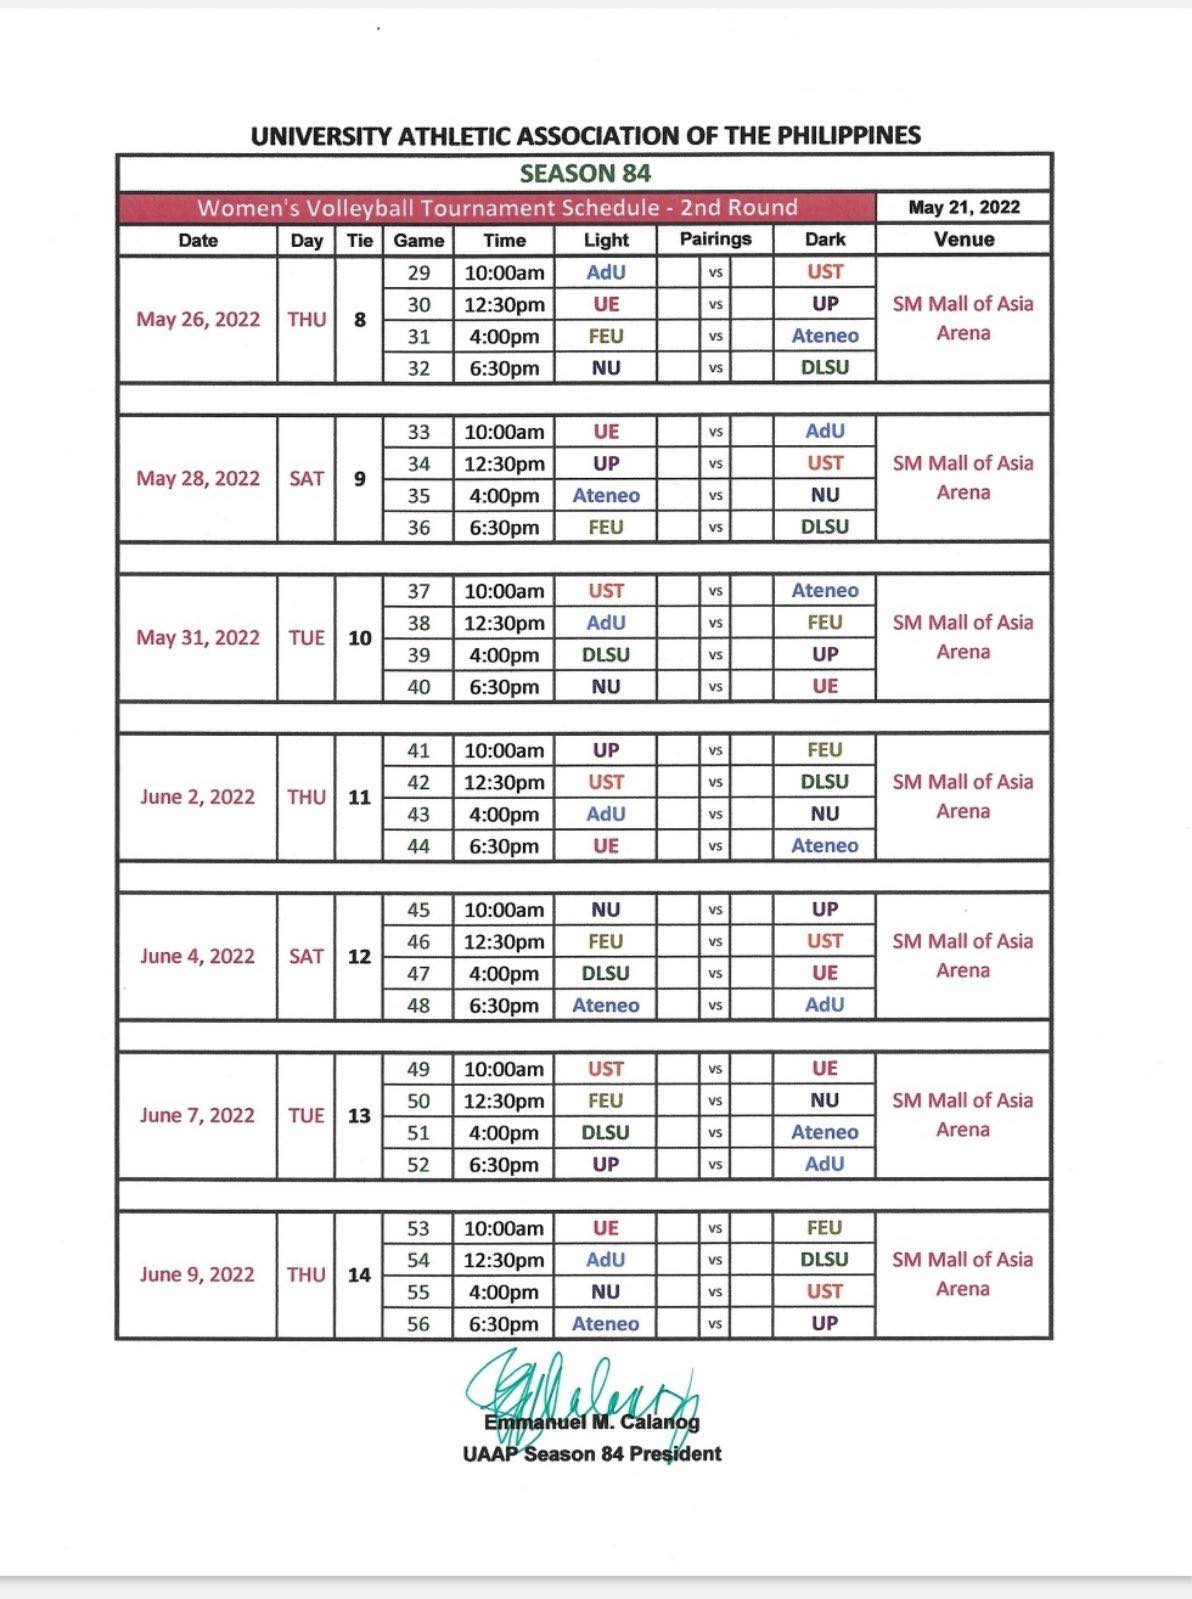 UAAP women's volleyball schedule second round season 84